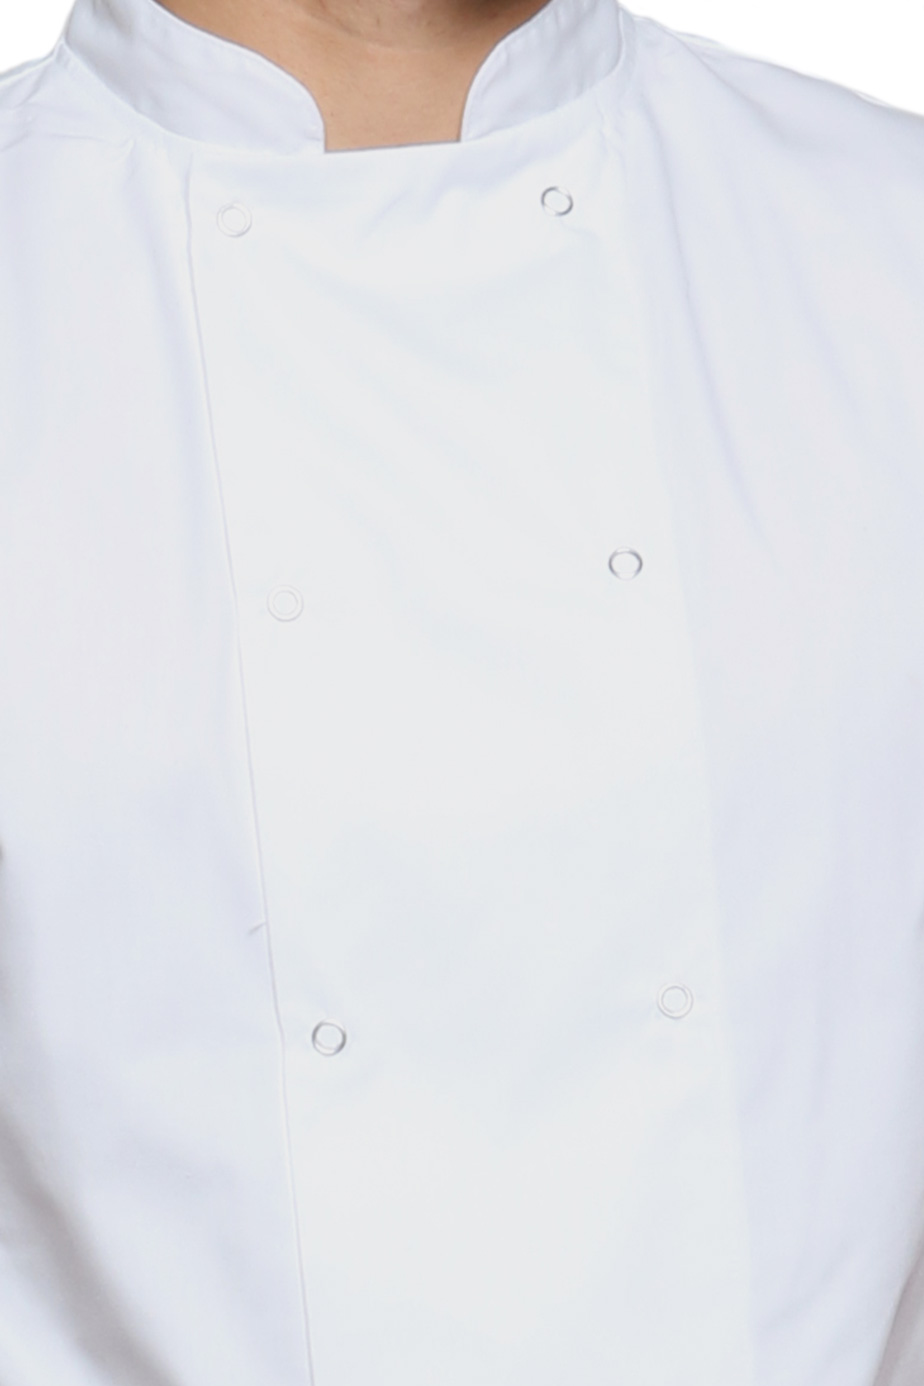 Chef Jacket Short Sleeve - Oregano - Mirabella